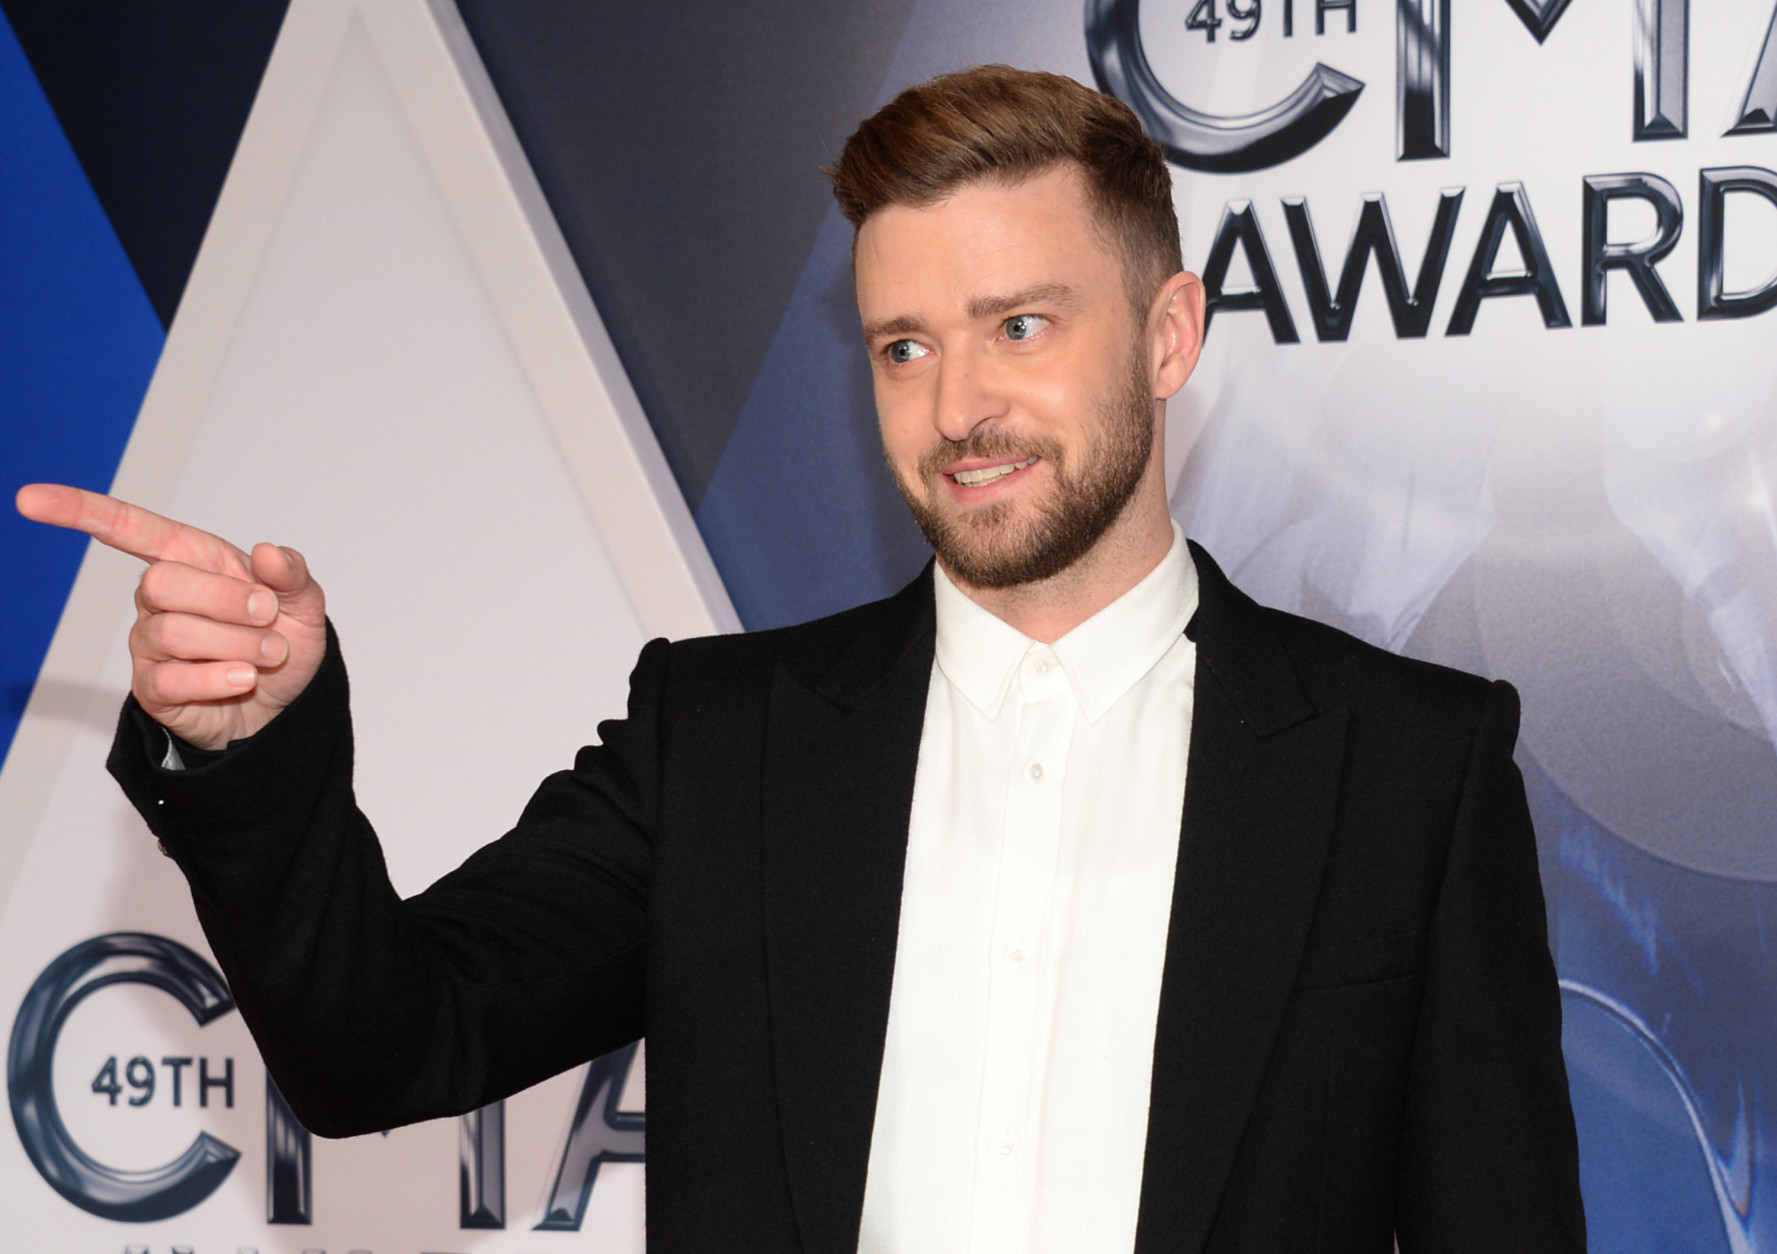 Justin Timberlake arrives at the 49th annual CMA Awards at the Bridgestone Arena on Wednesday, Nov. 4, 2015, in Nashville, Tenn. (Photo by Evan Agostini/Invision/AP)